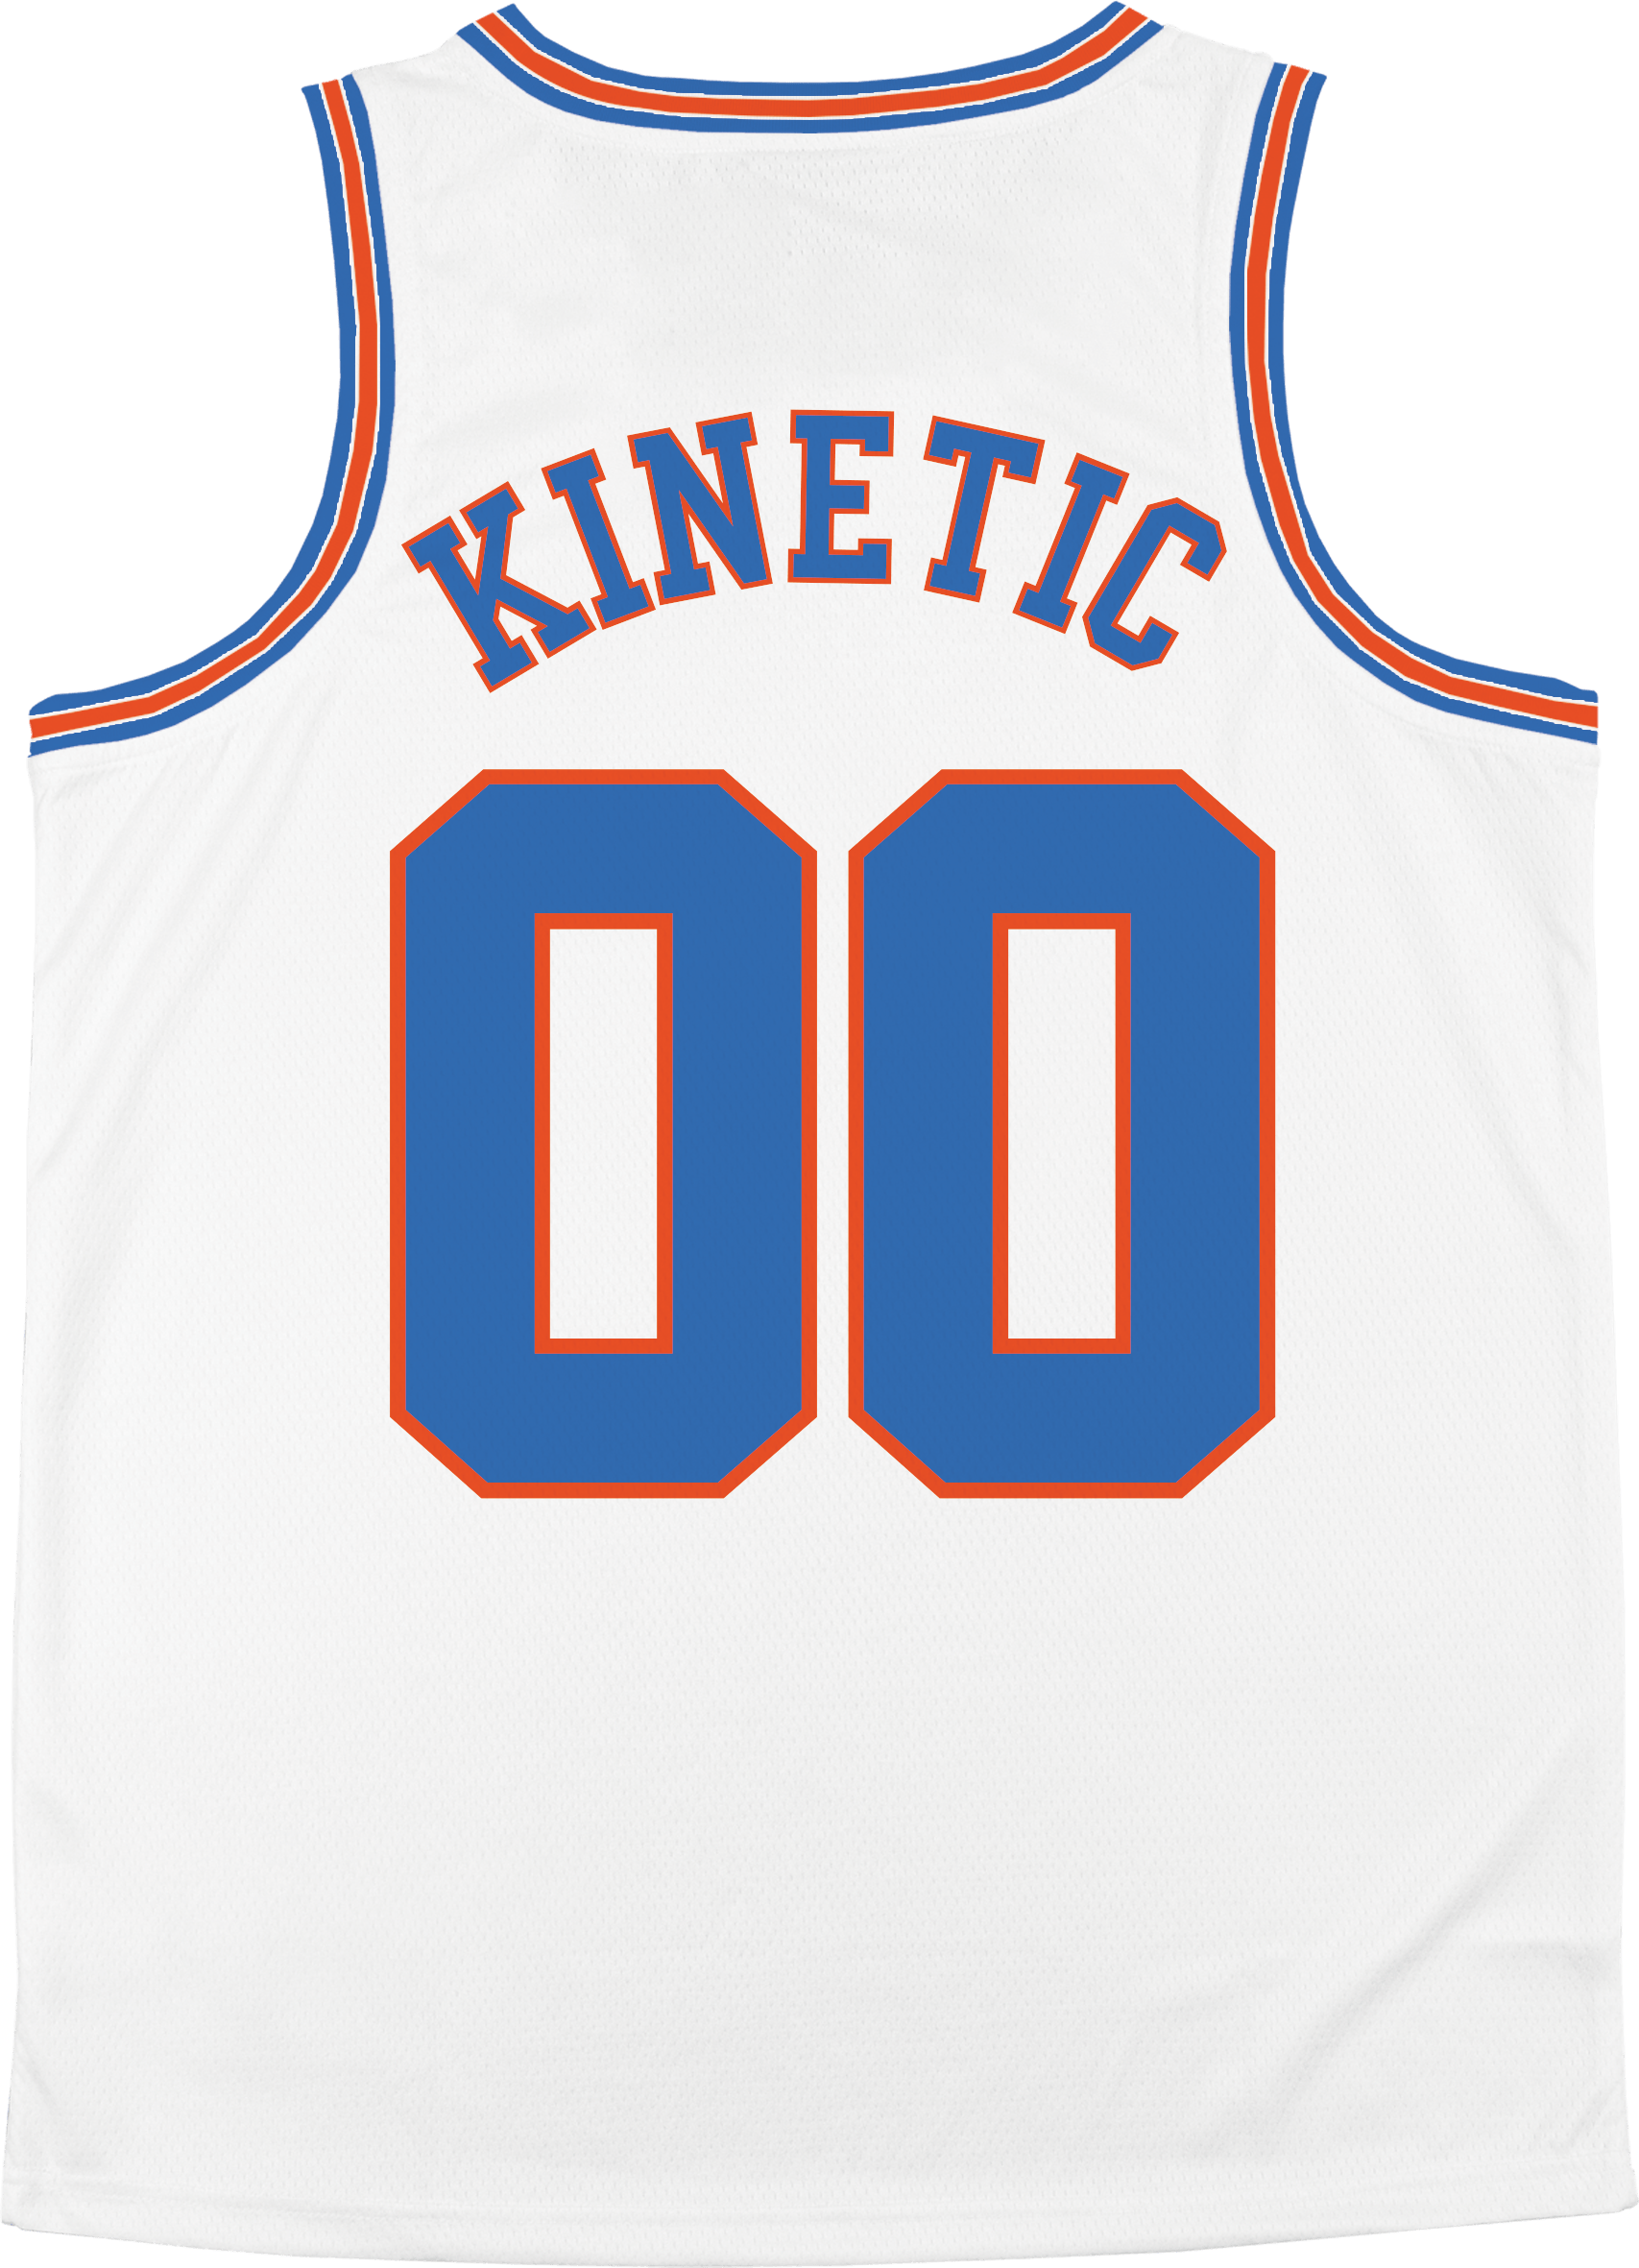 Alpha Phi - Vintage Basketball Jersey - Kinetic Society